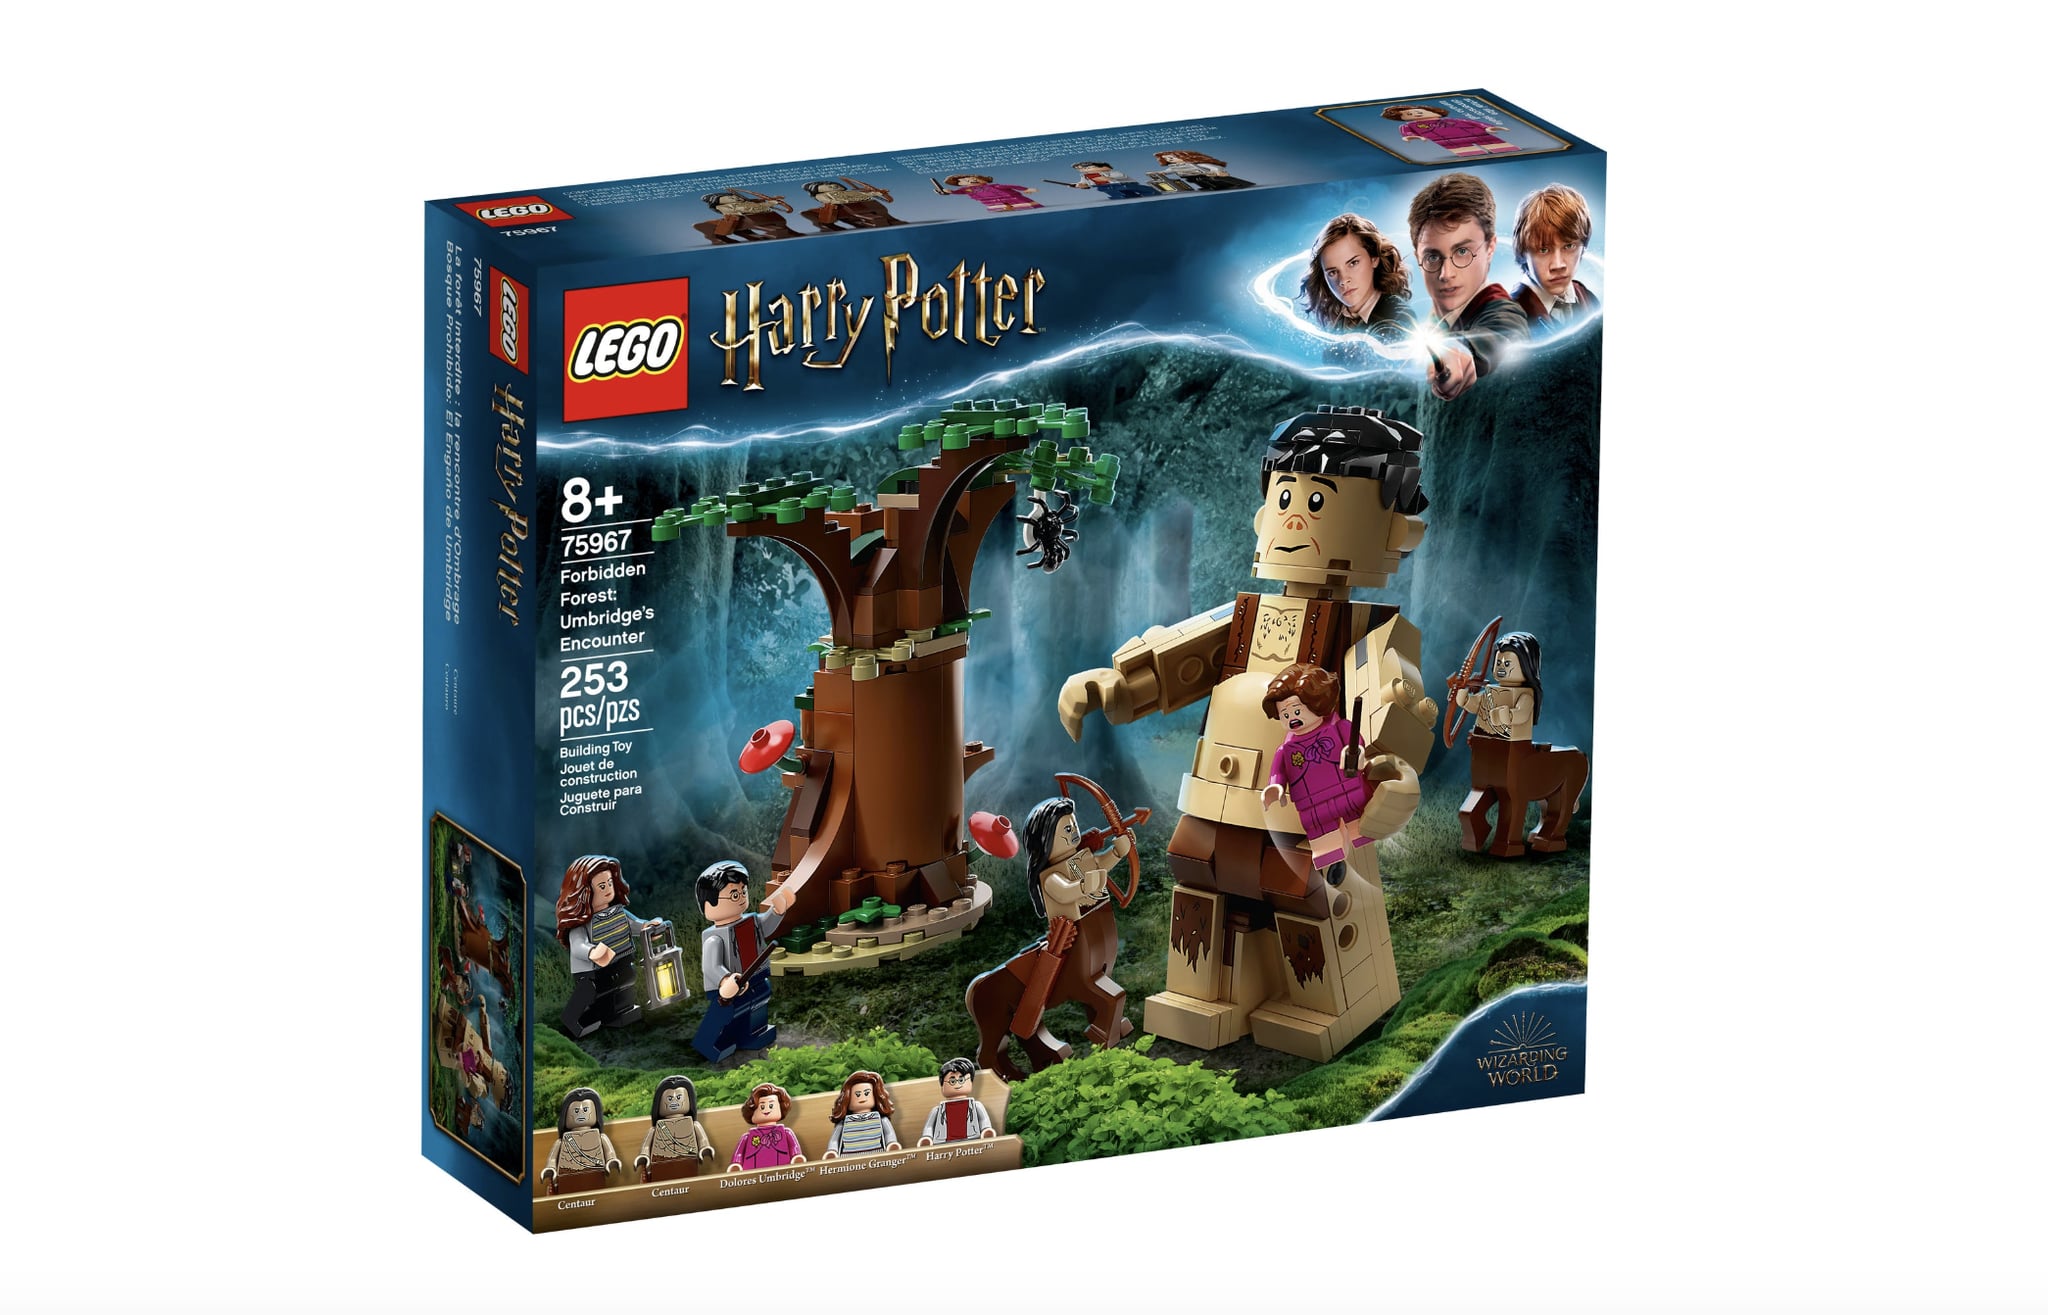 Lego Harry Potter Forbidden Forest: Umbridge's Encounter Set